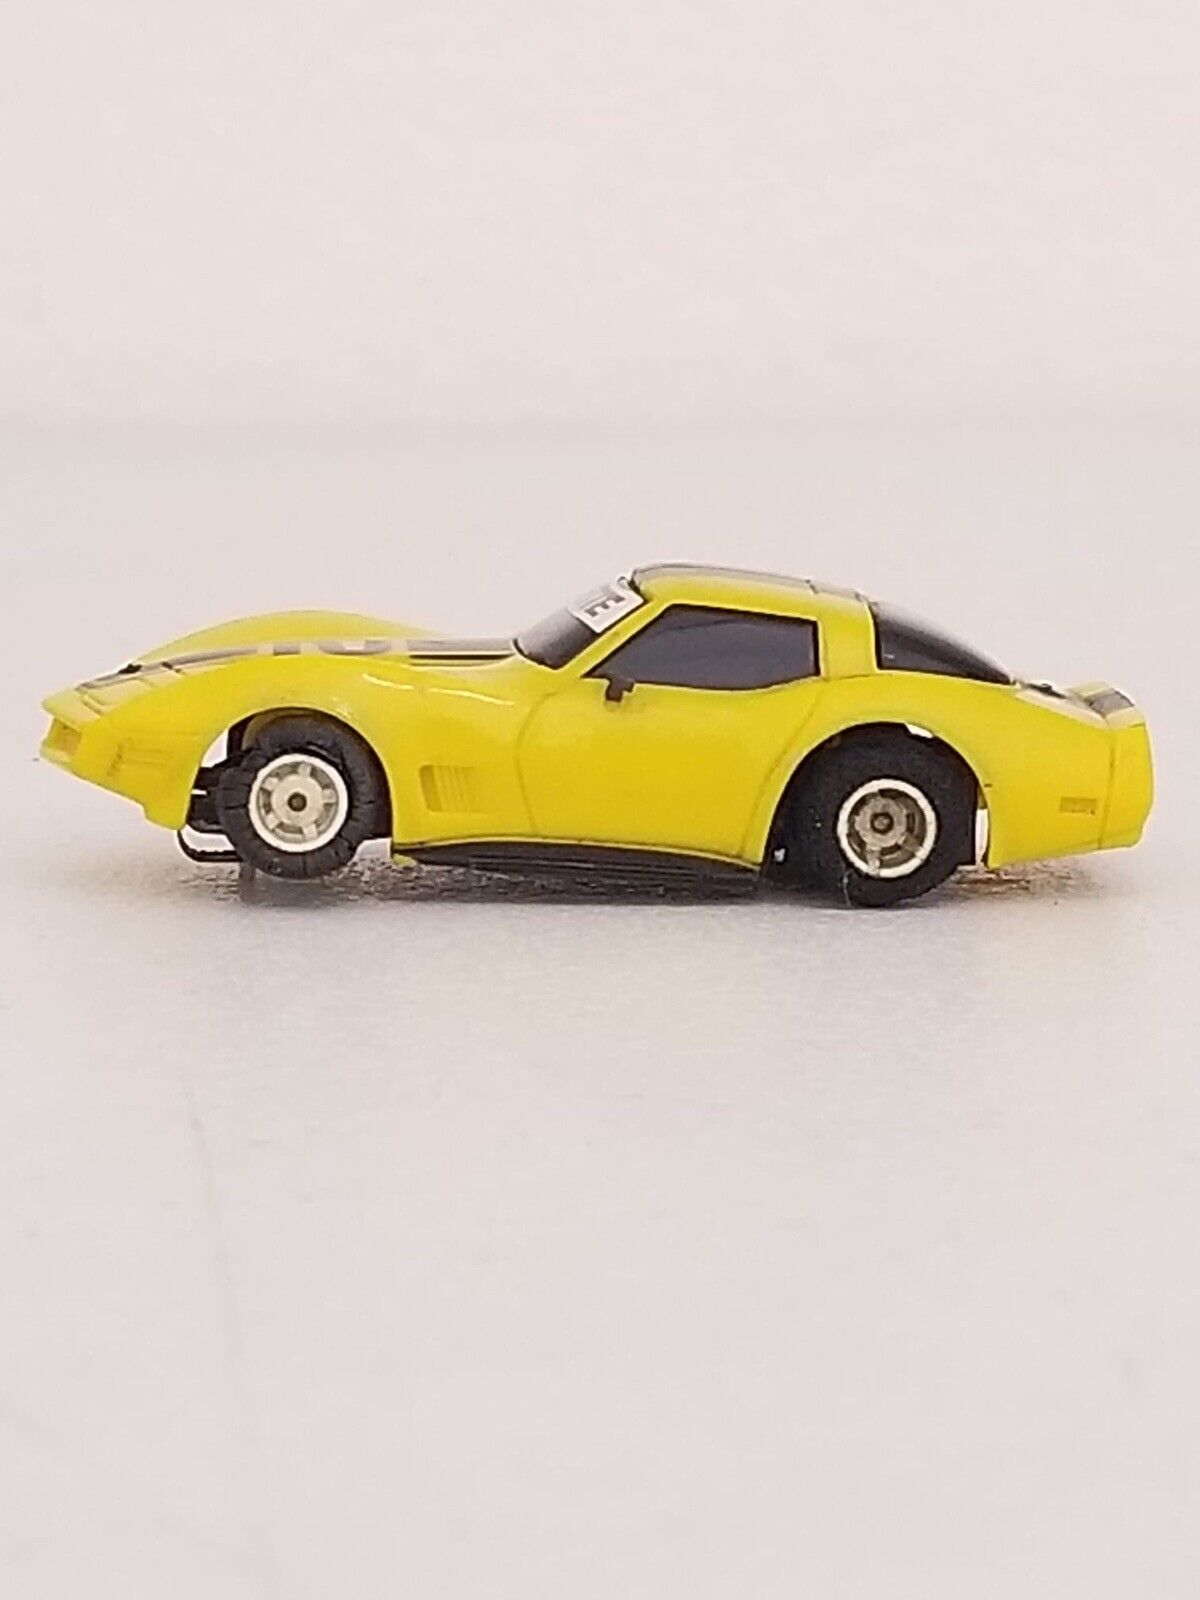 Vintage Yellow Corvette #2 HO Slot Car – Fully Operational Classic Collector's Item - TreasuTiques